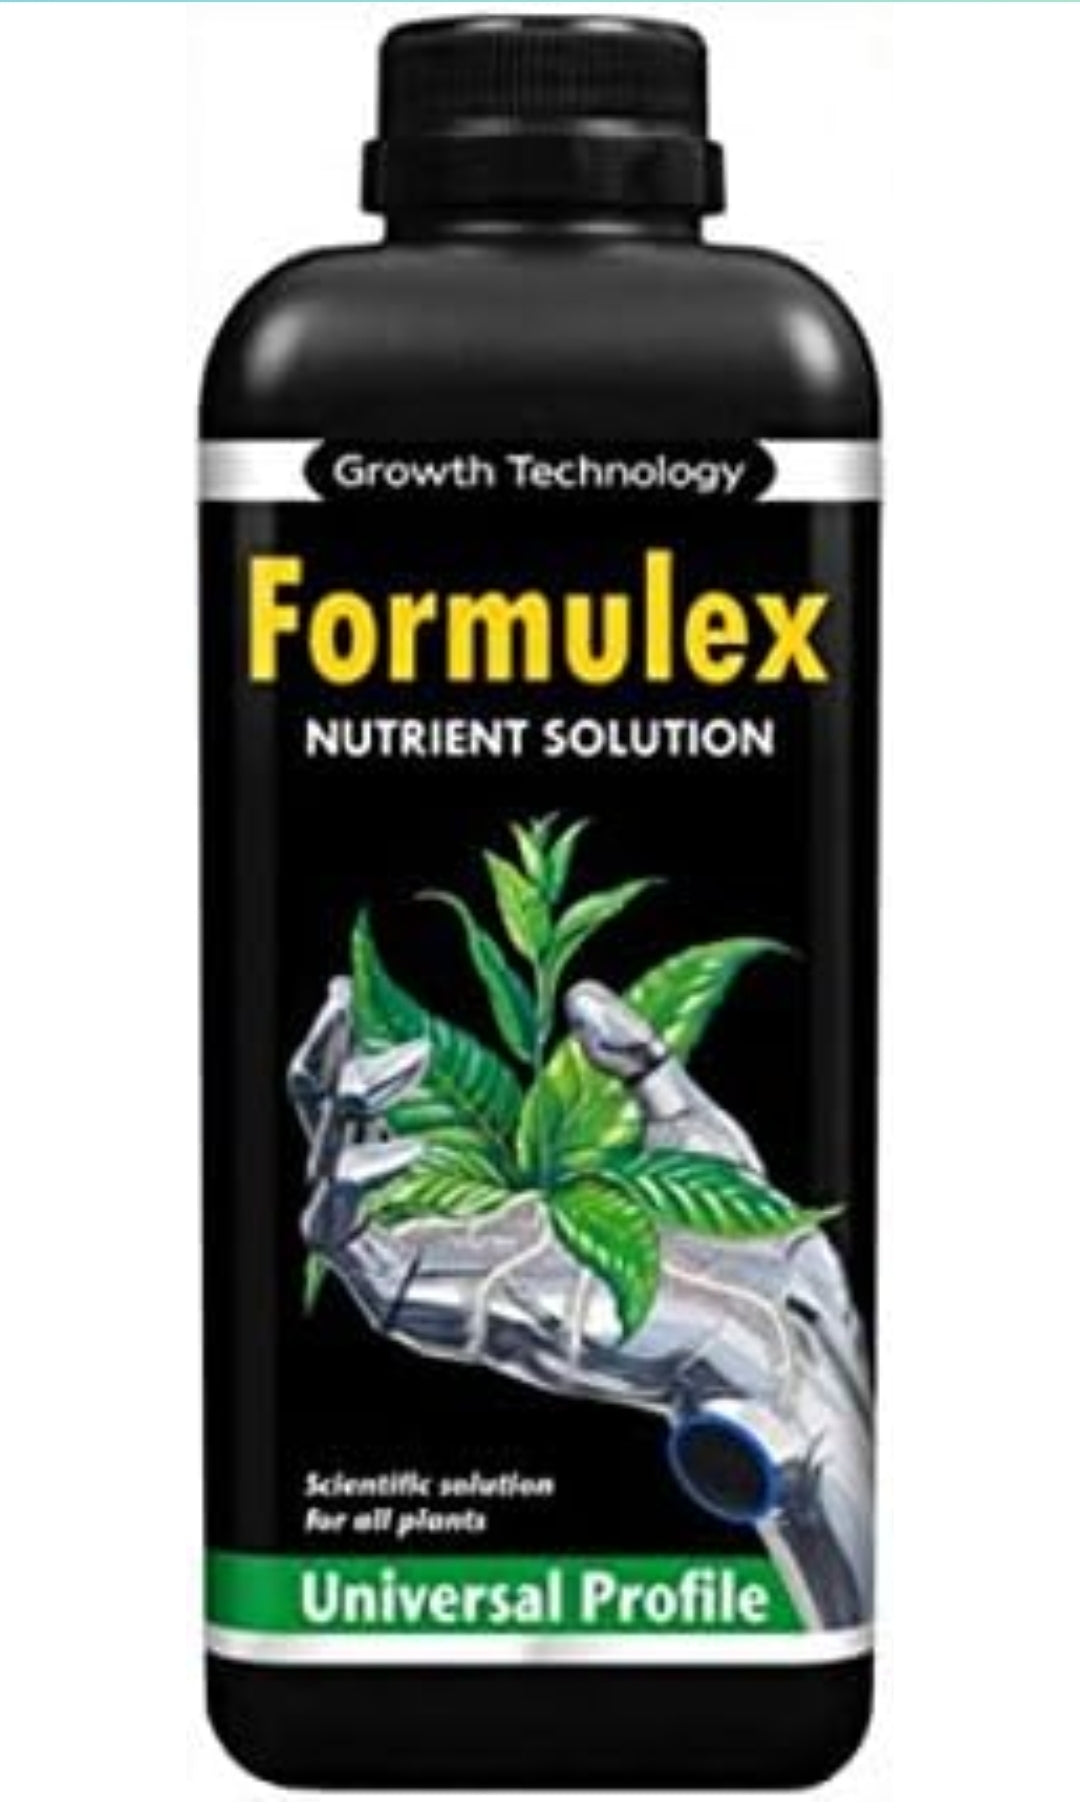 Growth Technology - Formulex